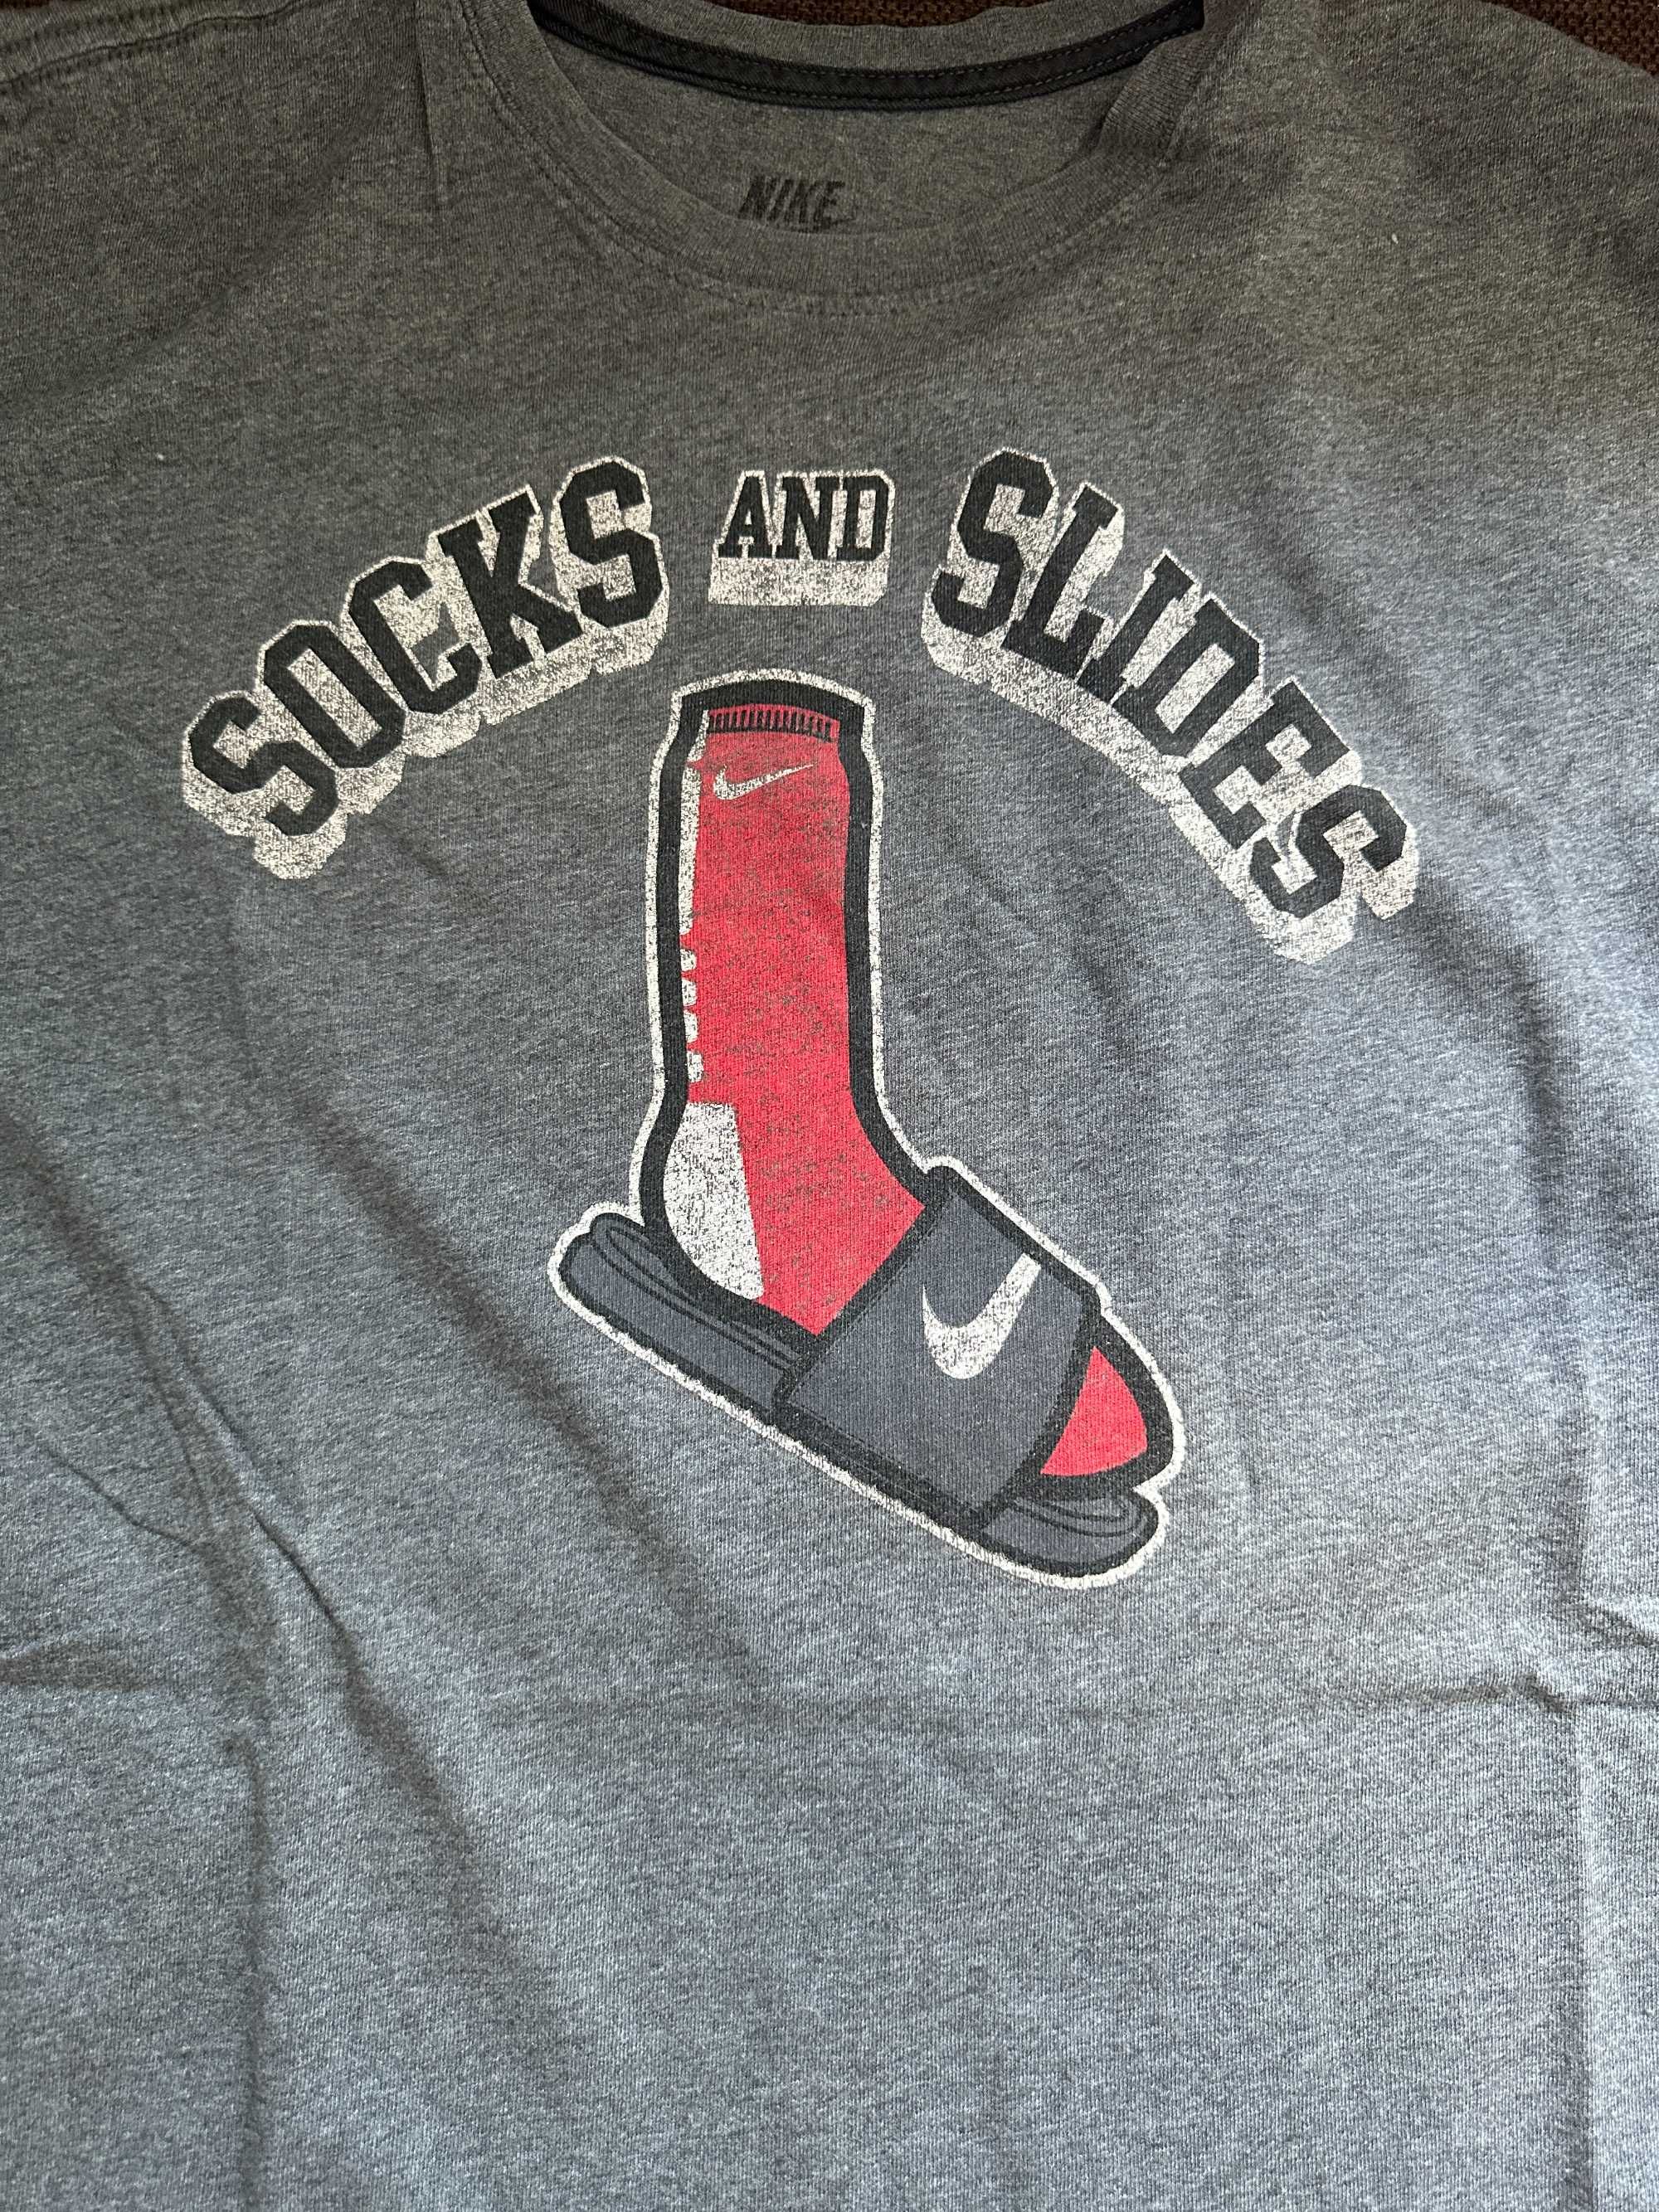 Szara koszulka Nike - Socks and Slides - XL